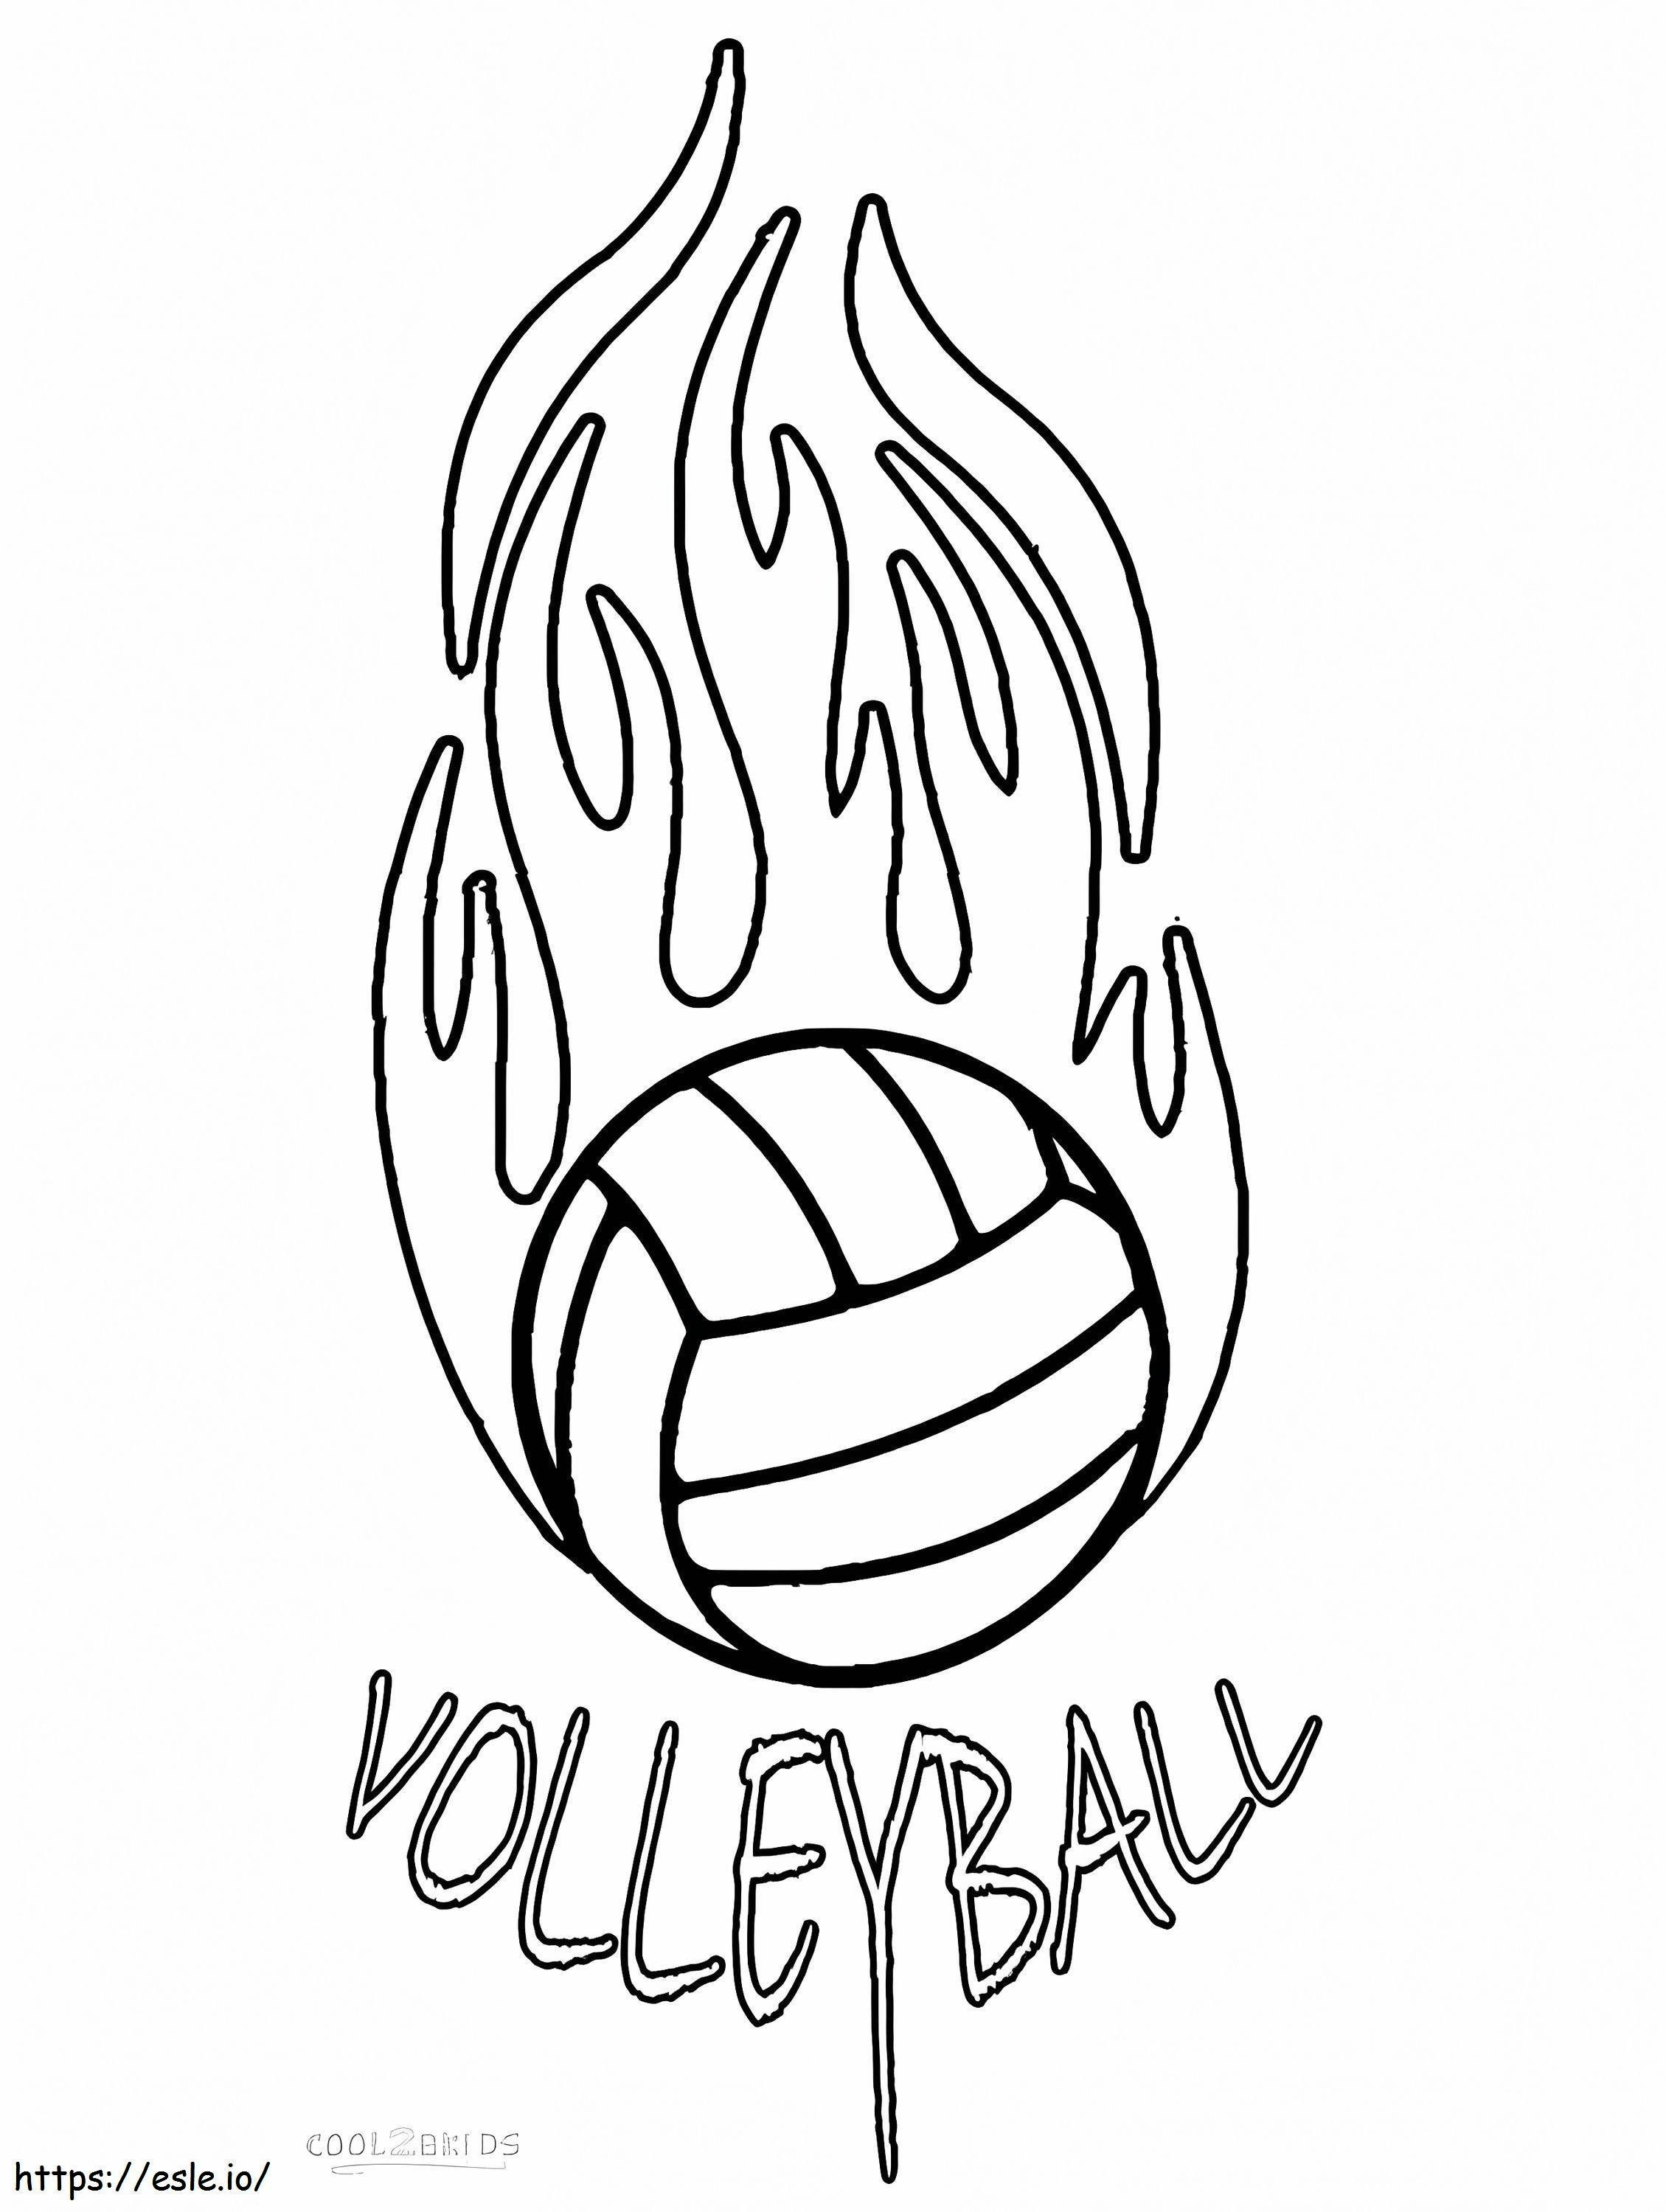 Pelota de voleibol en llamas para colorear